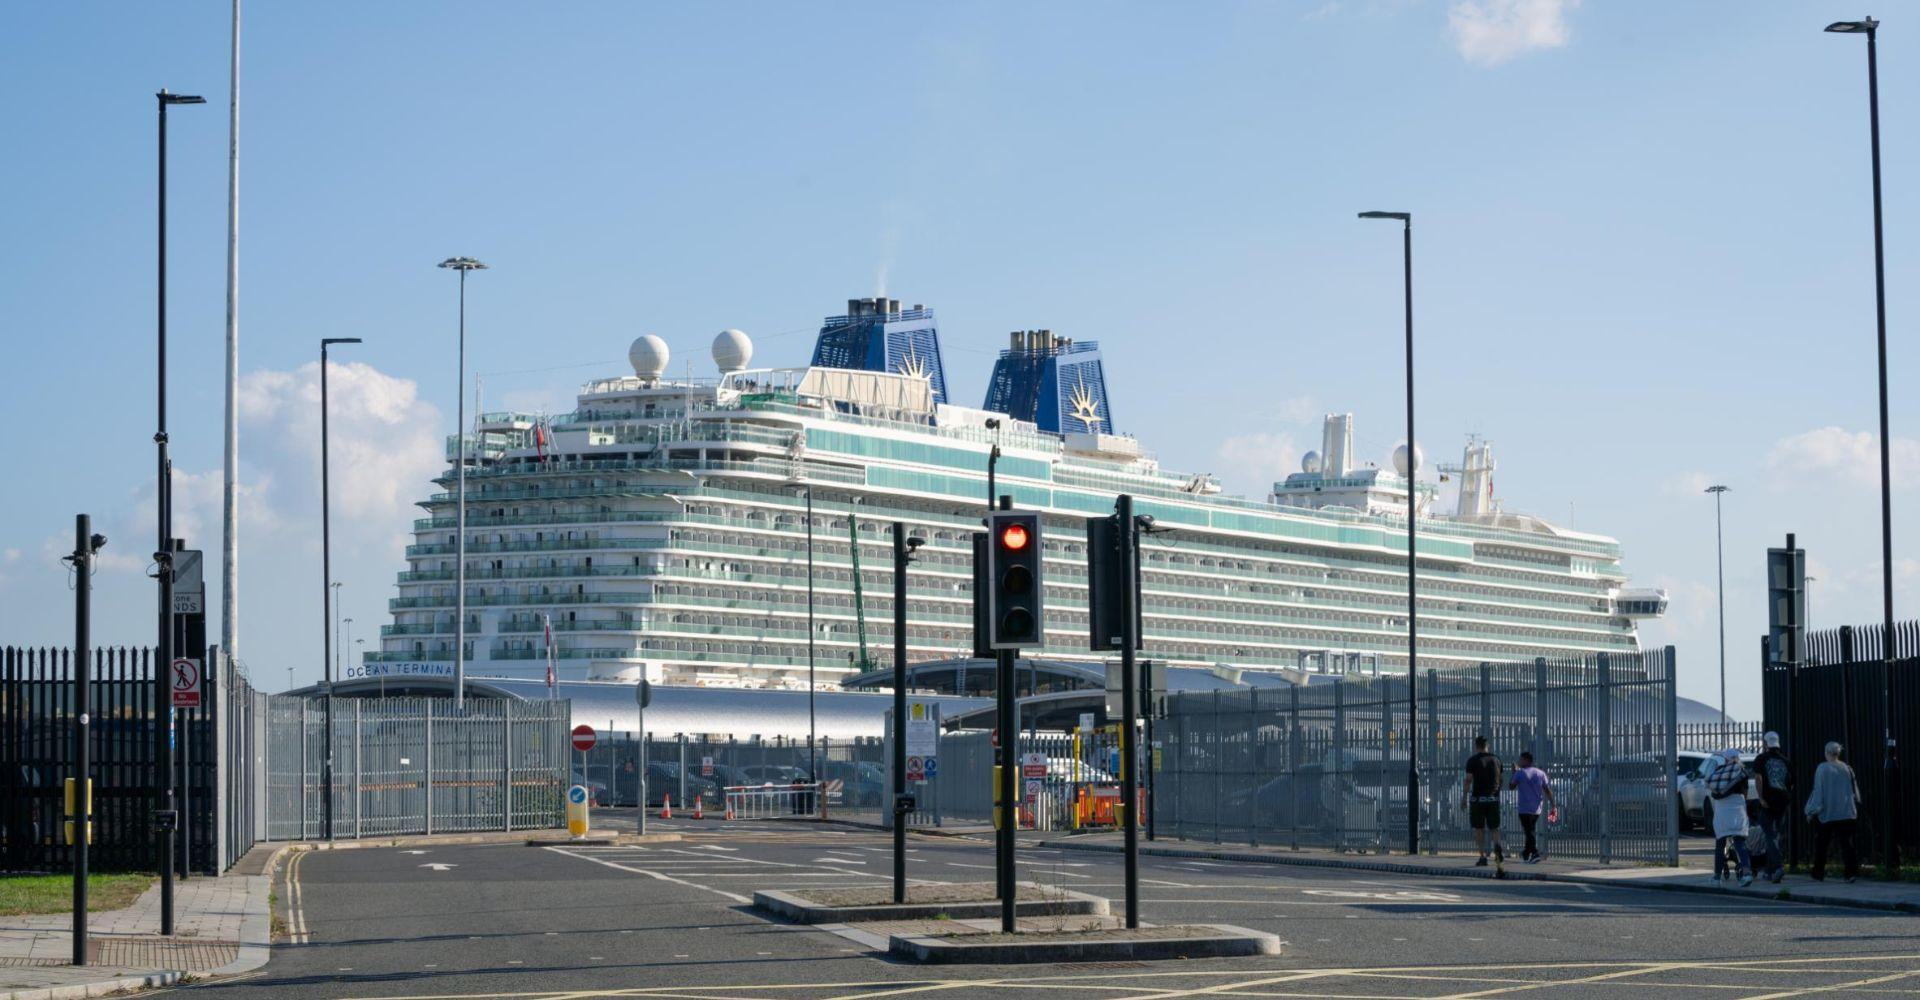 PO Cruise ship docked at Southampton cruise terminal